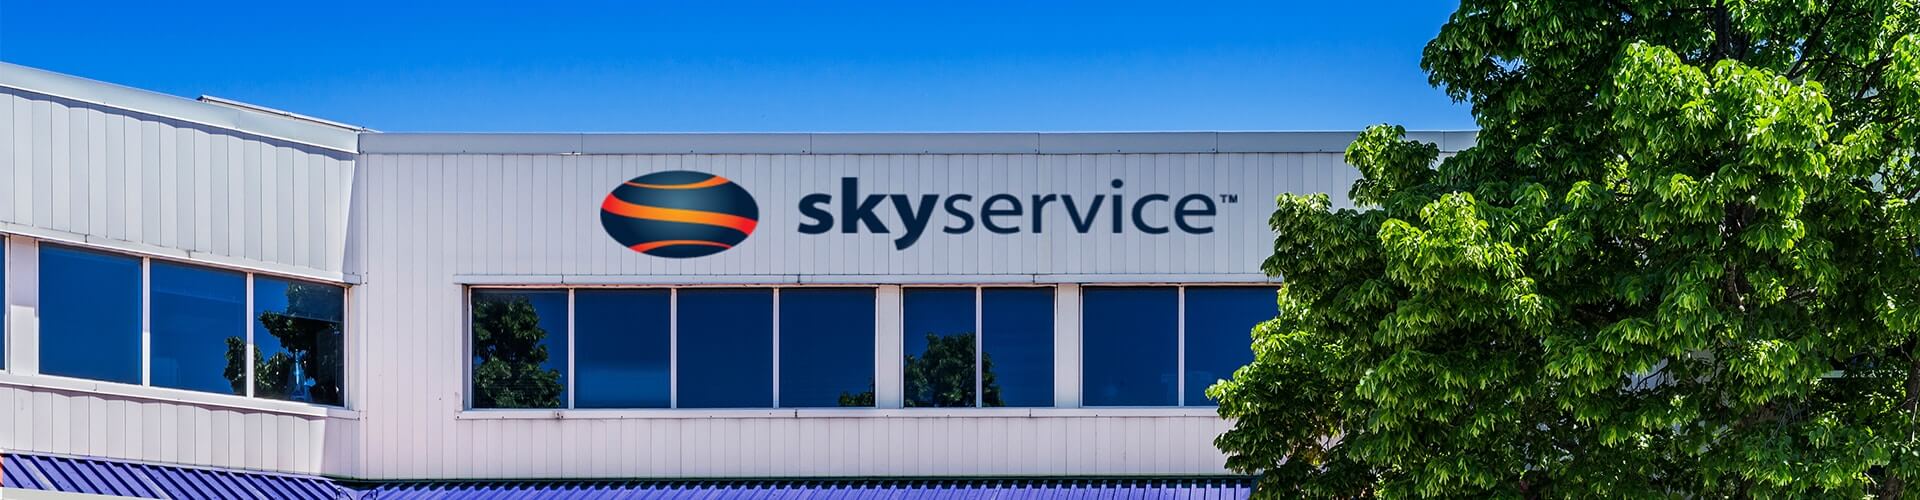 Skyservice FBO - Ottawa building